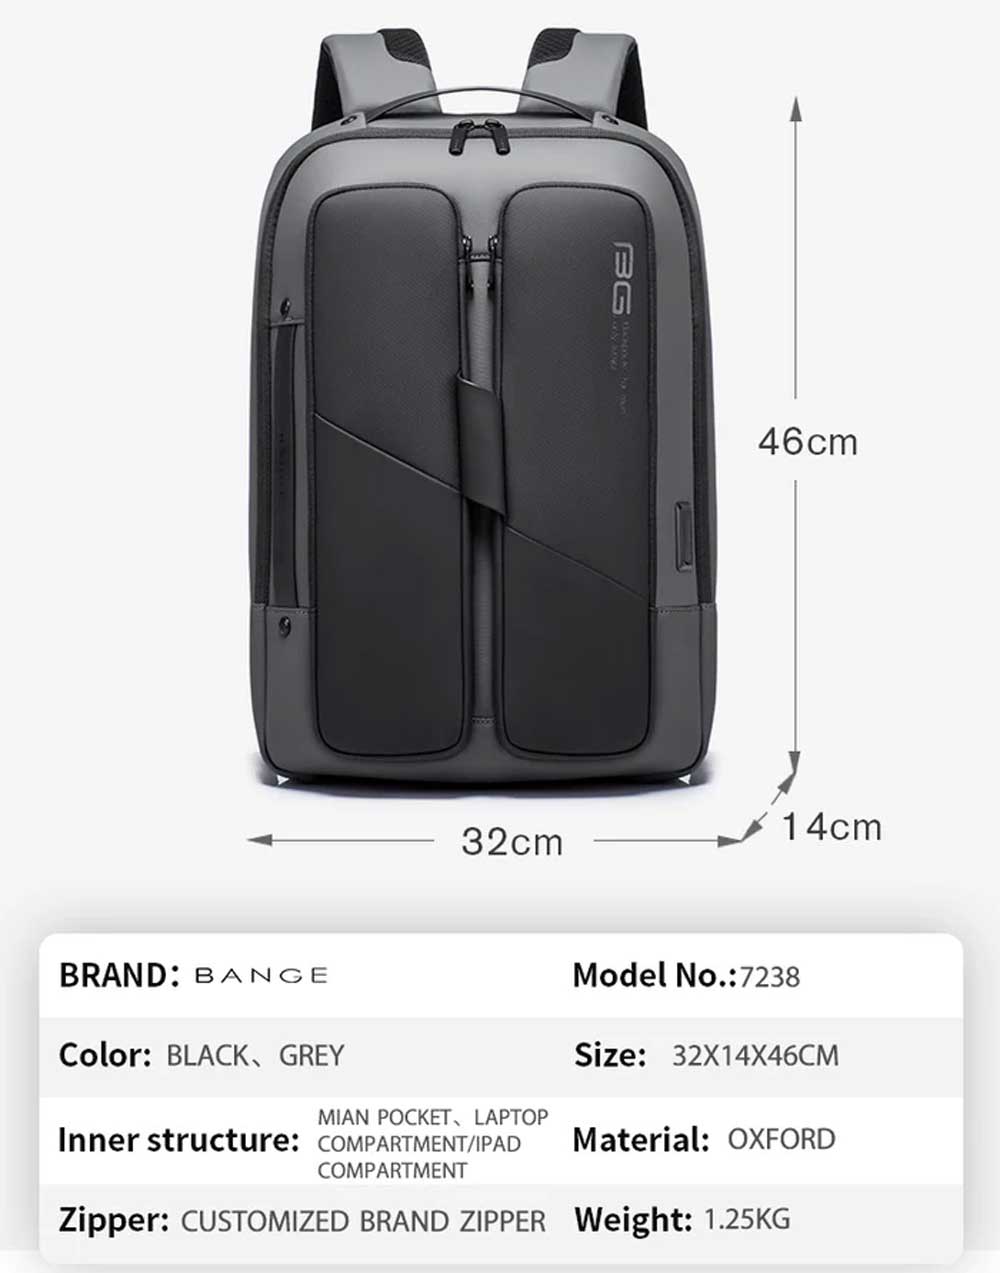 Bange BG 7238 Fashion Slim Laptop Backpack 21